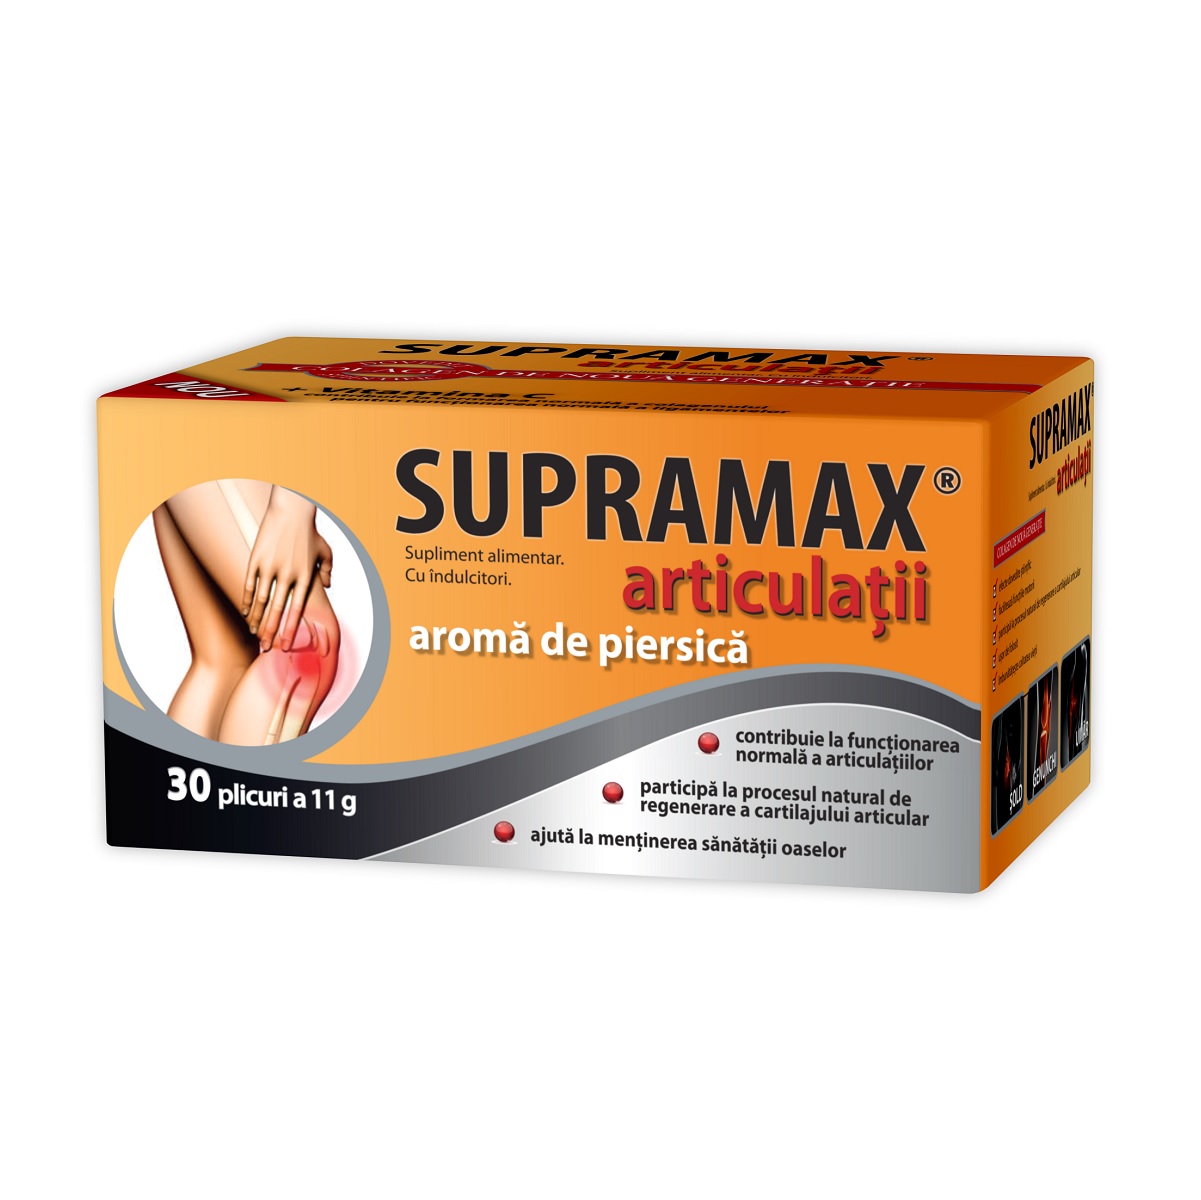 Artroze - Supramax Articulatii aroma de piersica 10g x 30pl (Zdrovit), epastila.ro